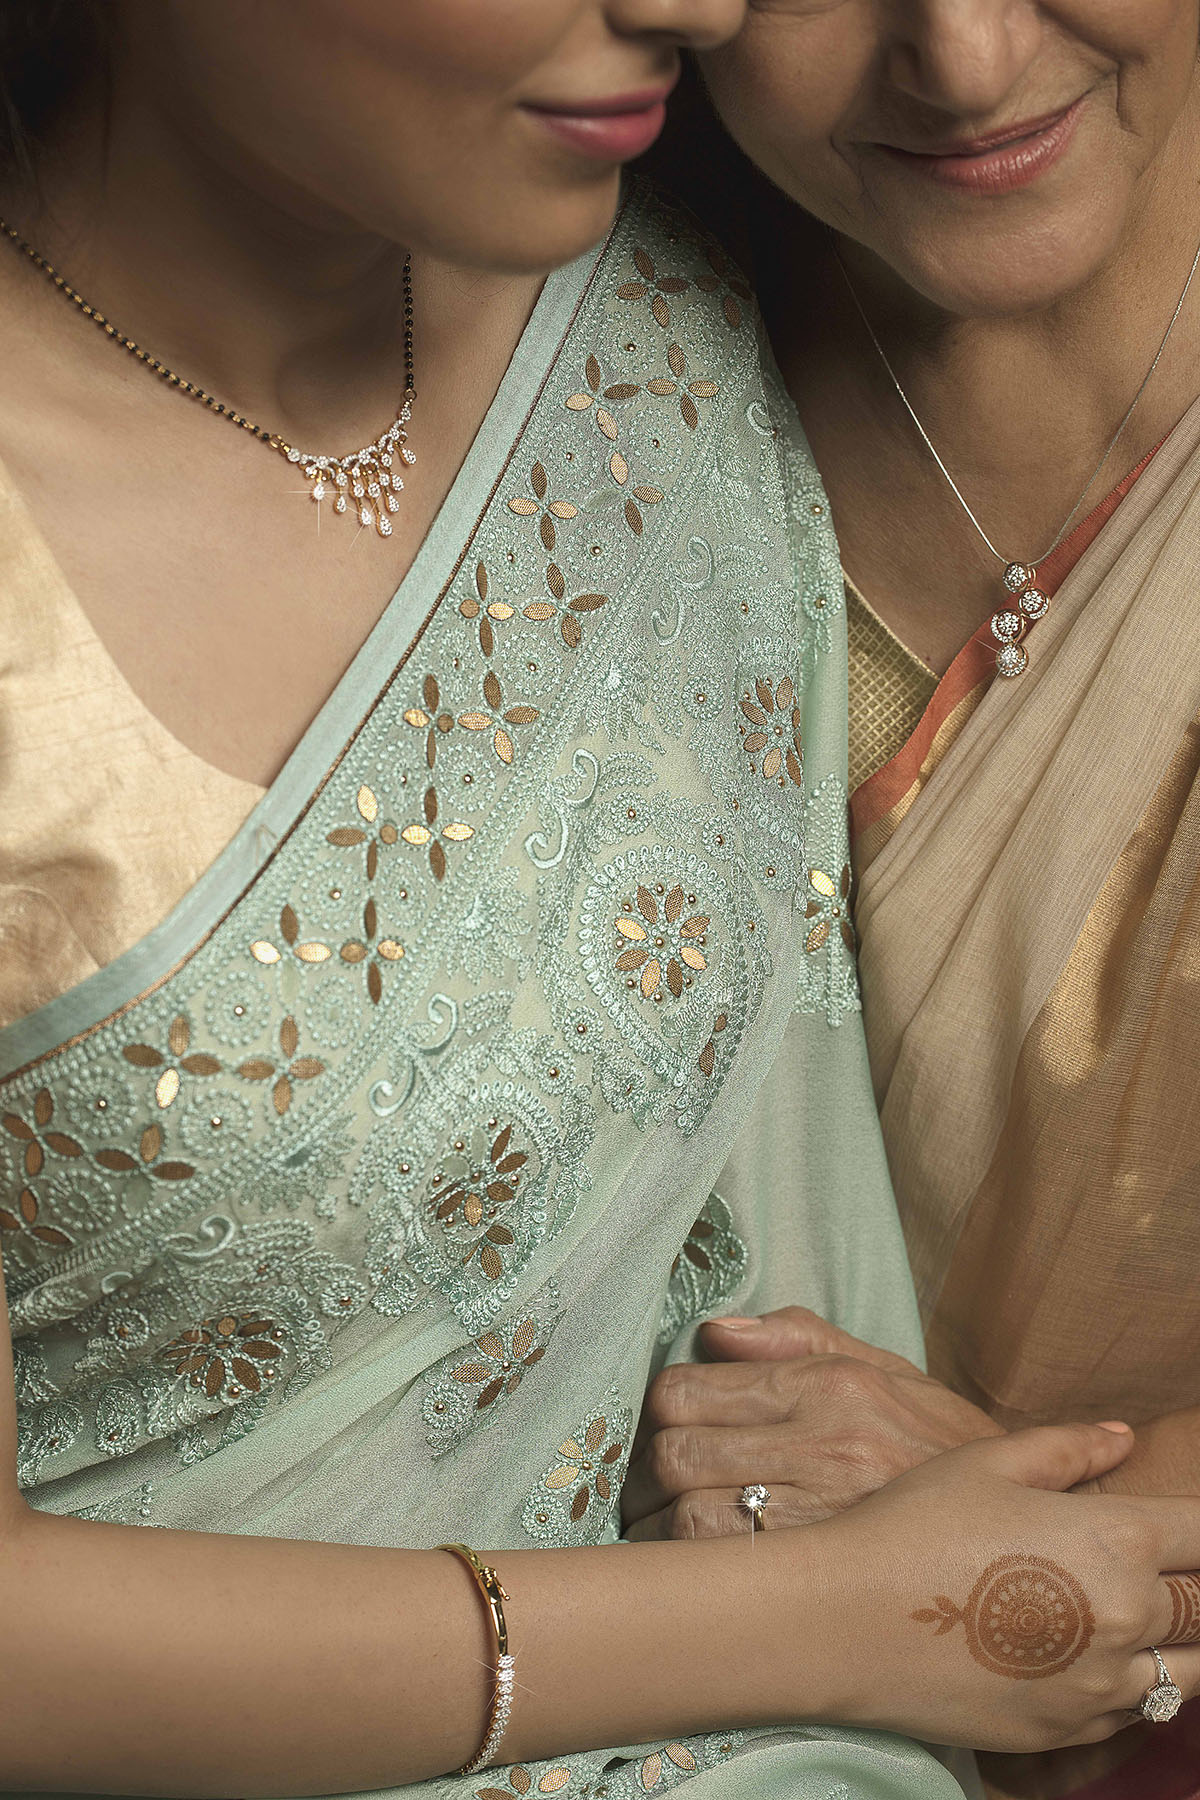 Mom and Daughter, Together. Kisna Diamond Jewellery